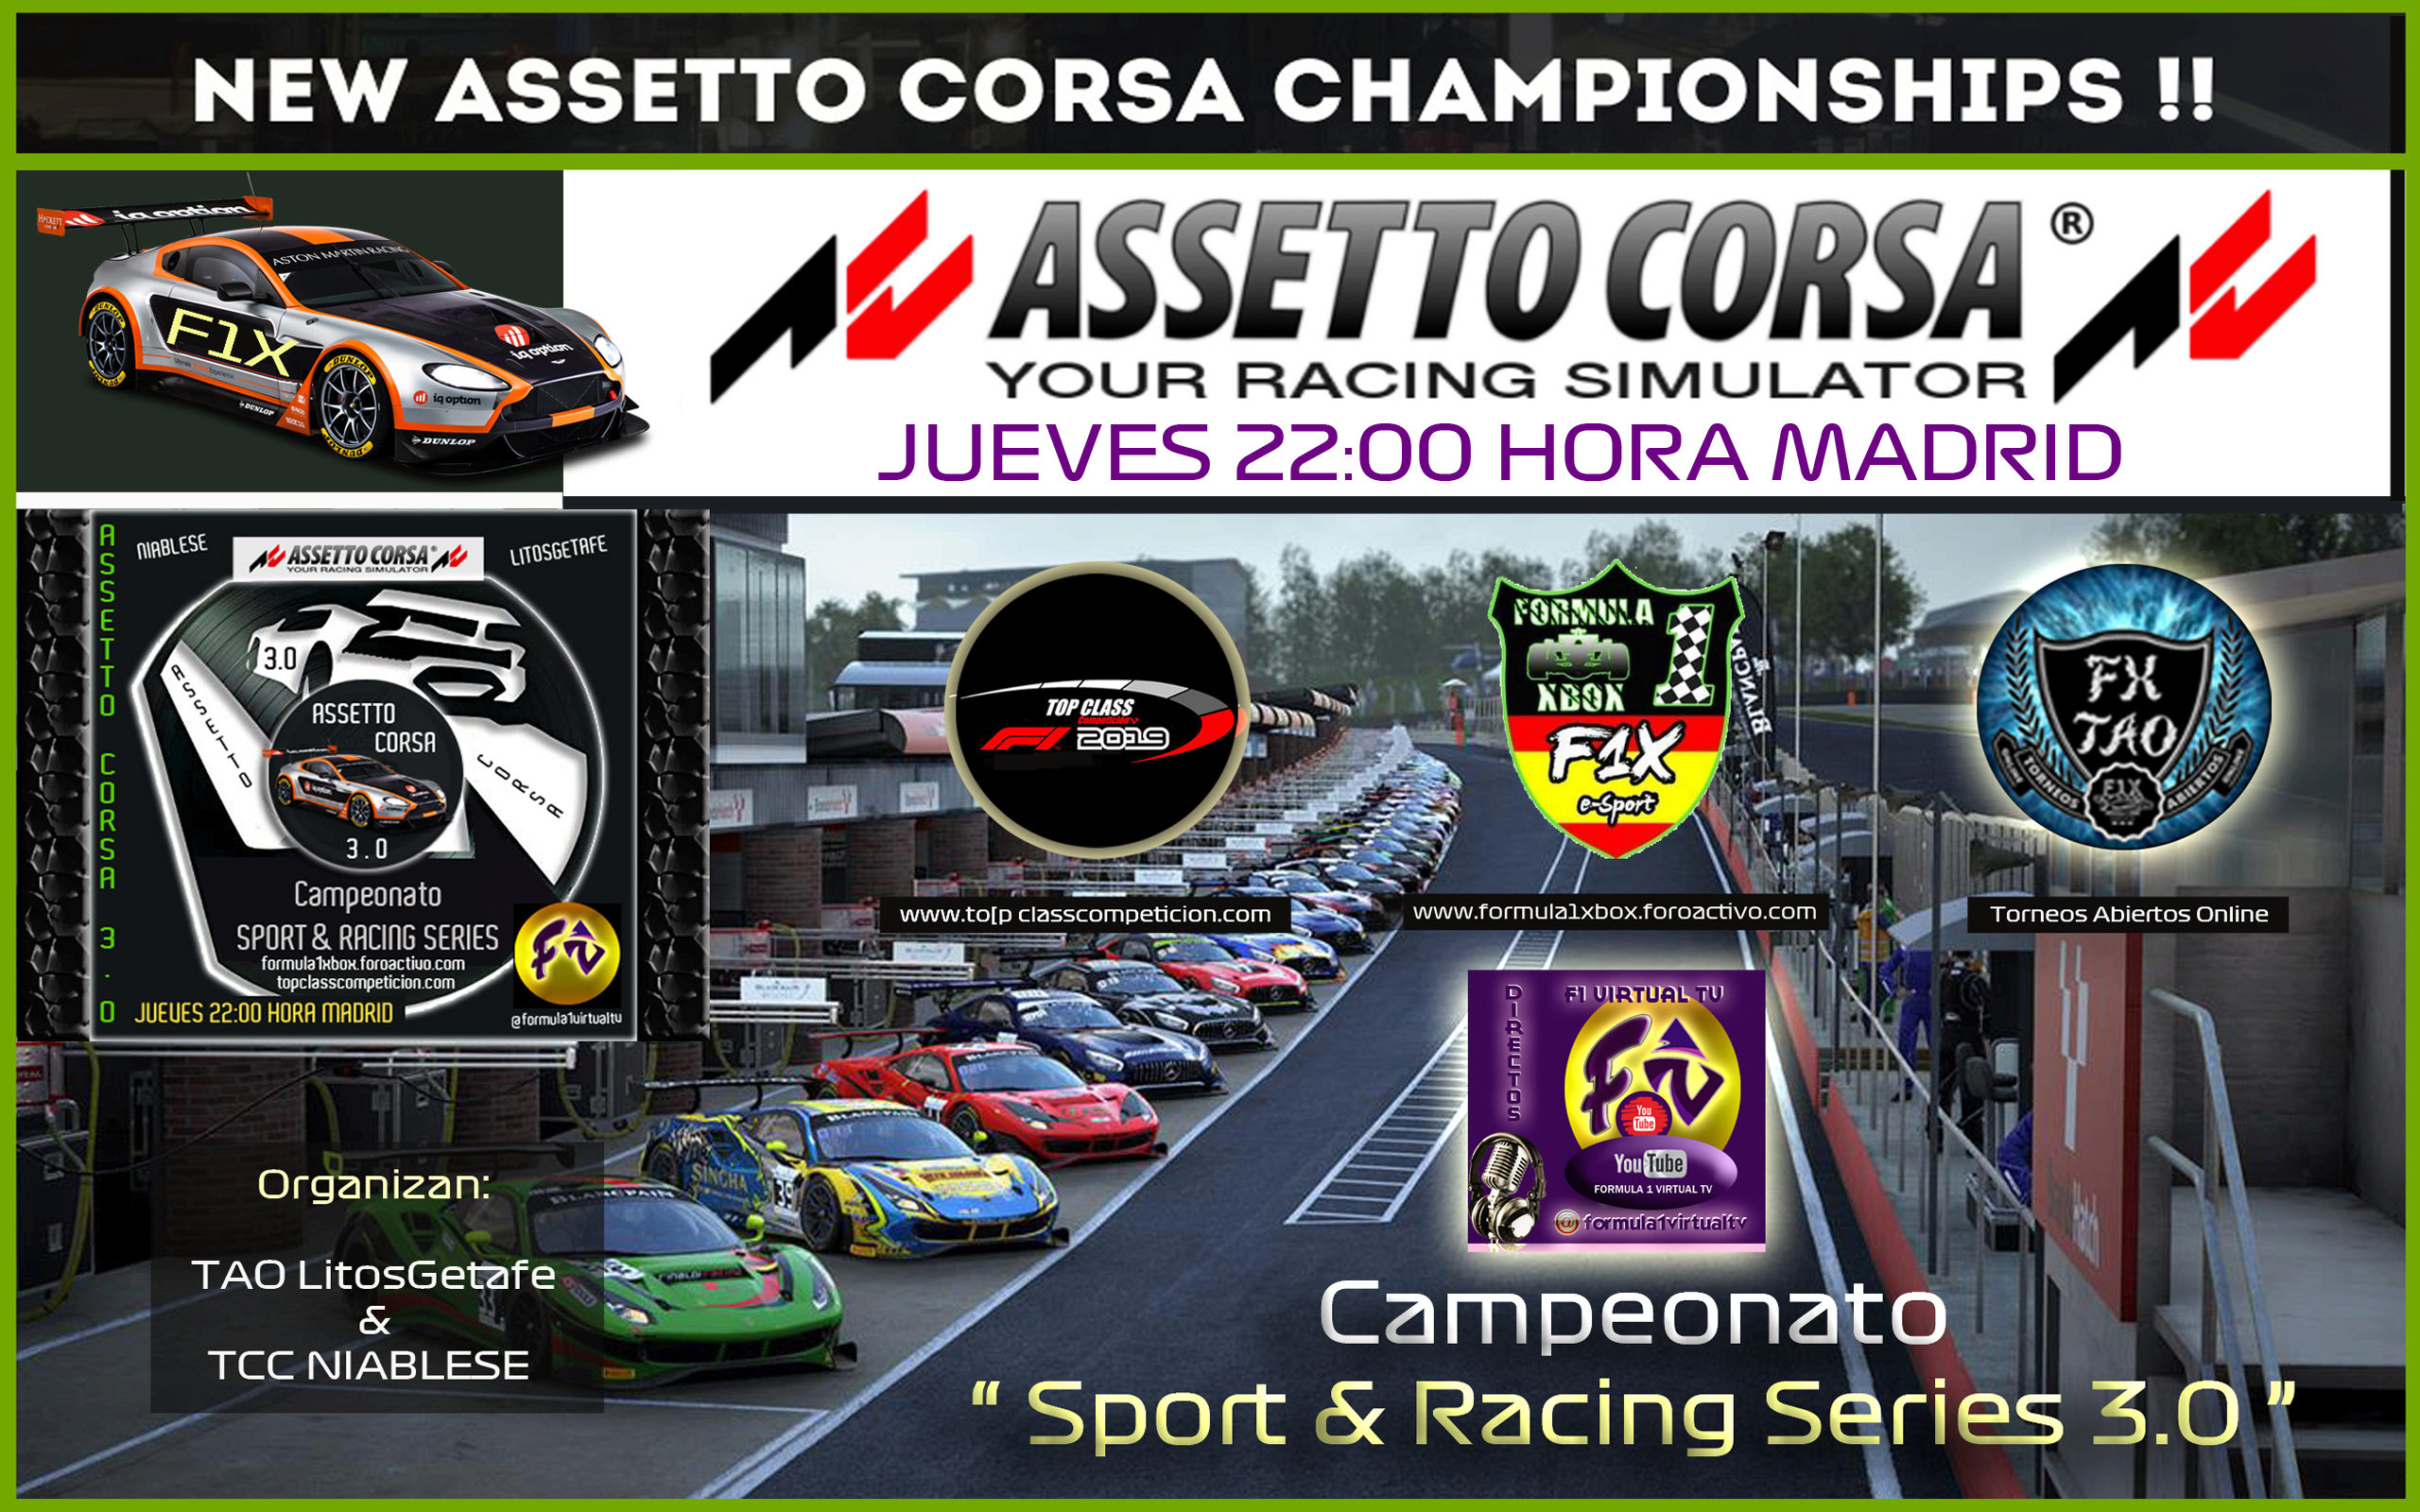  ASSETTO CORSA /// CAMPEONATO SPORT & RACING SERIES 3.0 /// RACE 1 BRAND HACHT - RESULTADOS + PODIUM + CLASIFICACION GENERAL Confir26